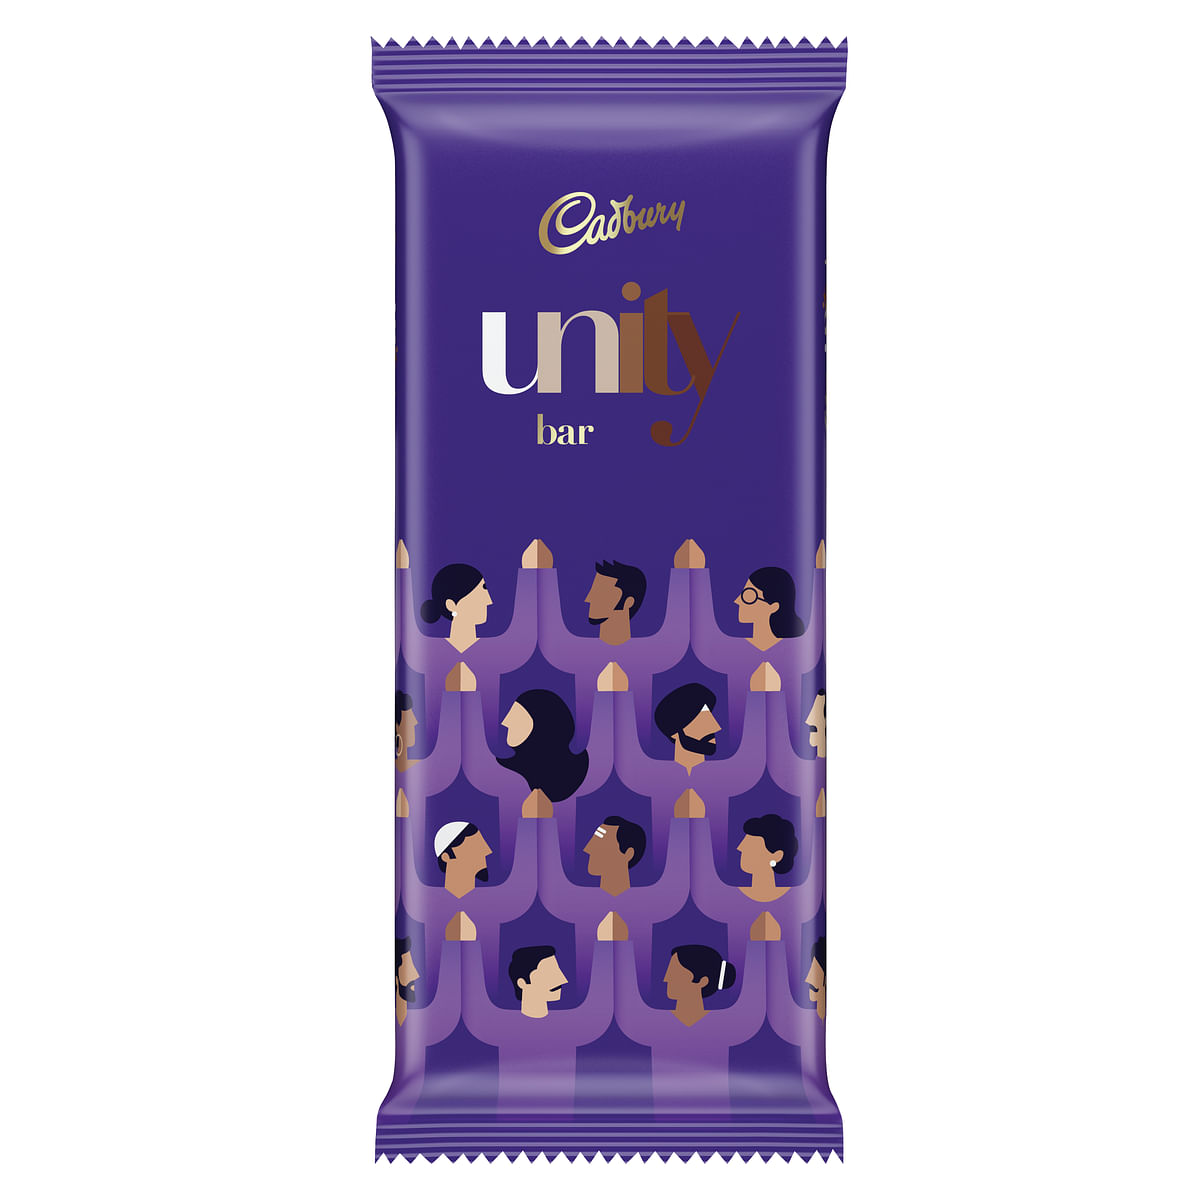 A look at Cadbury's new unity bar's packaging